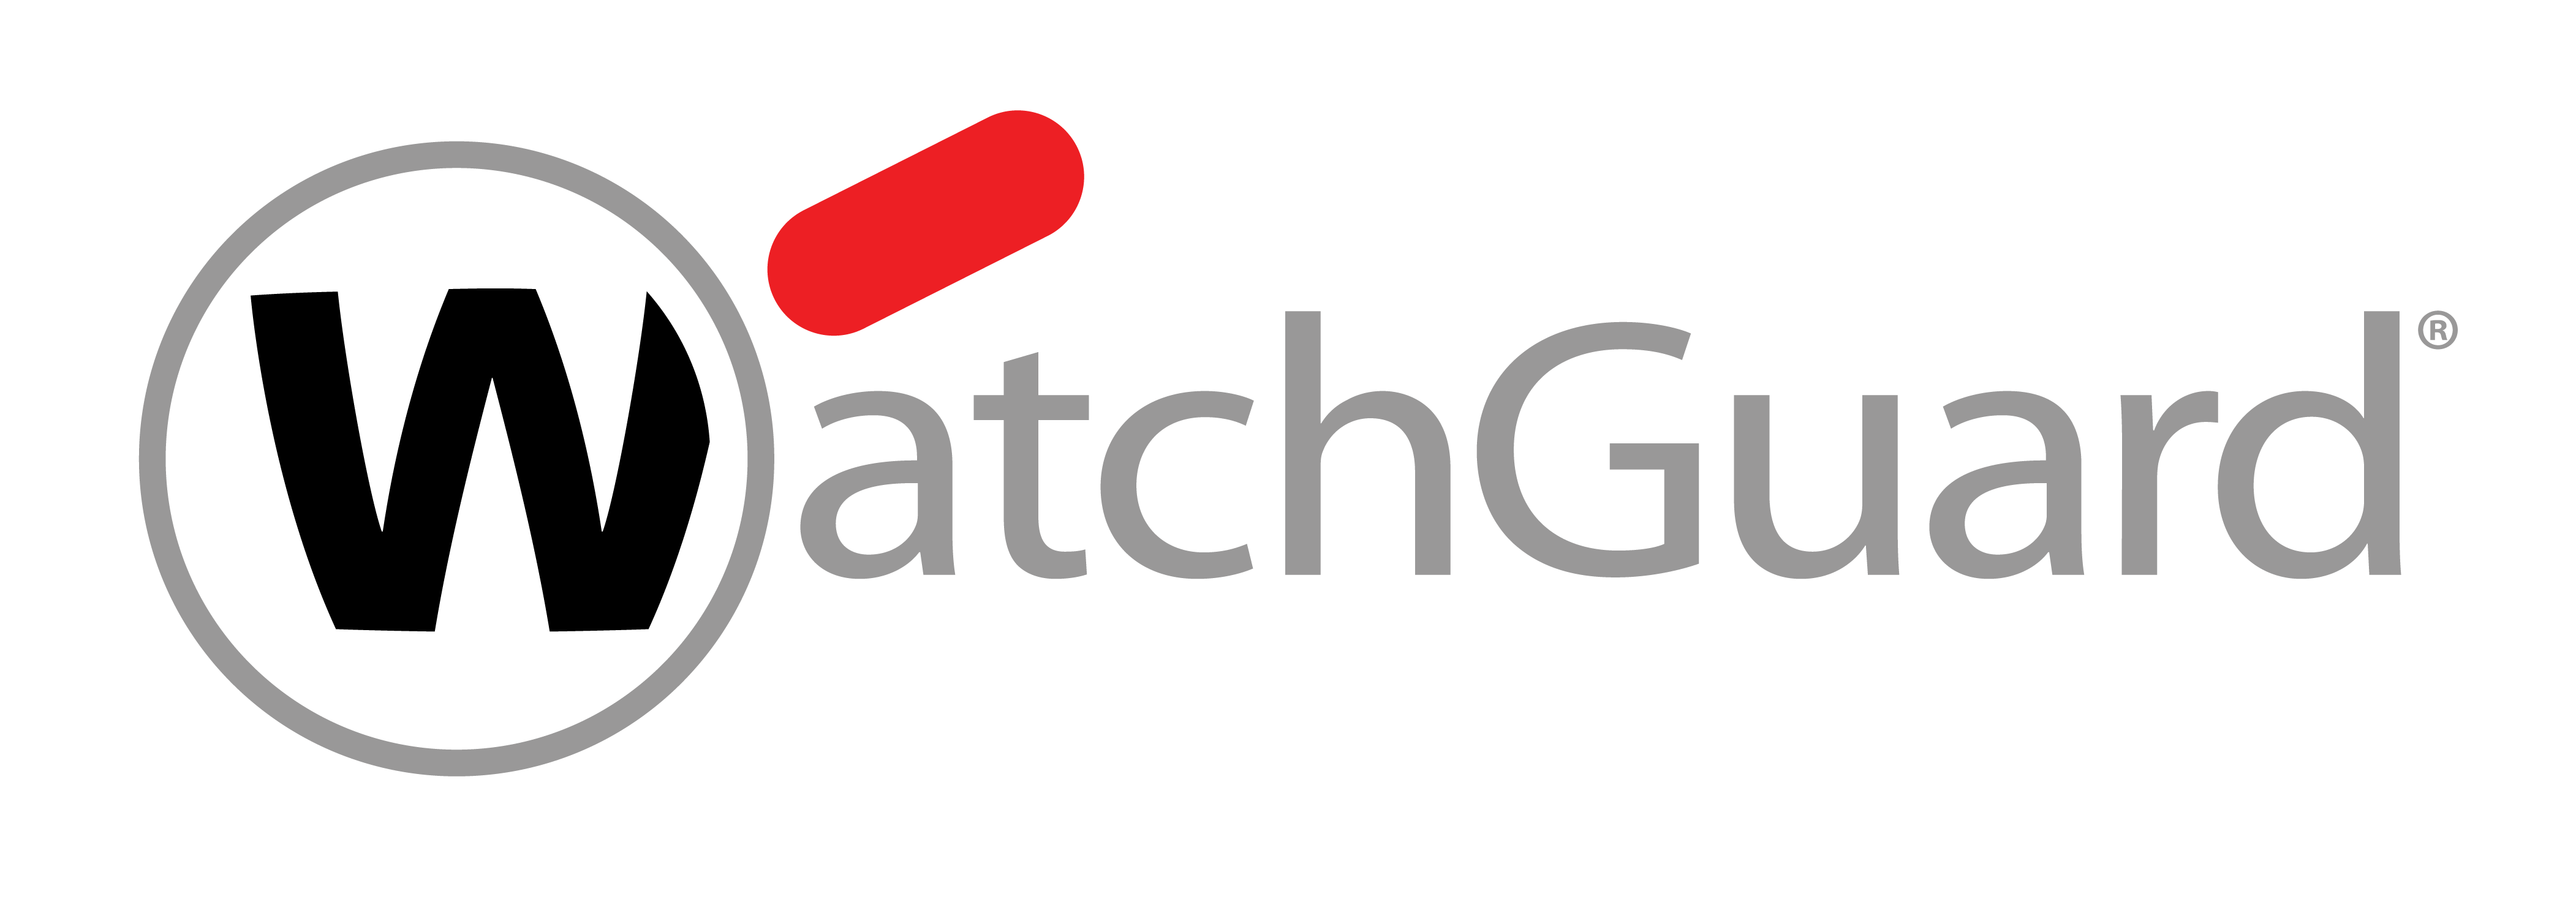 WatchGuard Technologies, Inc.